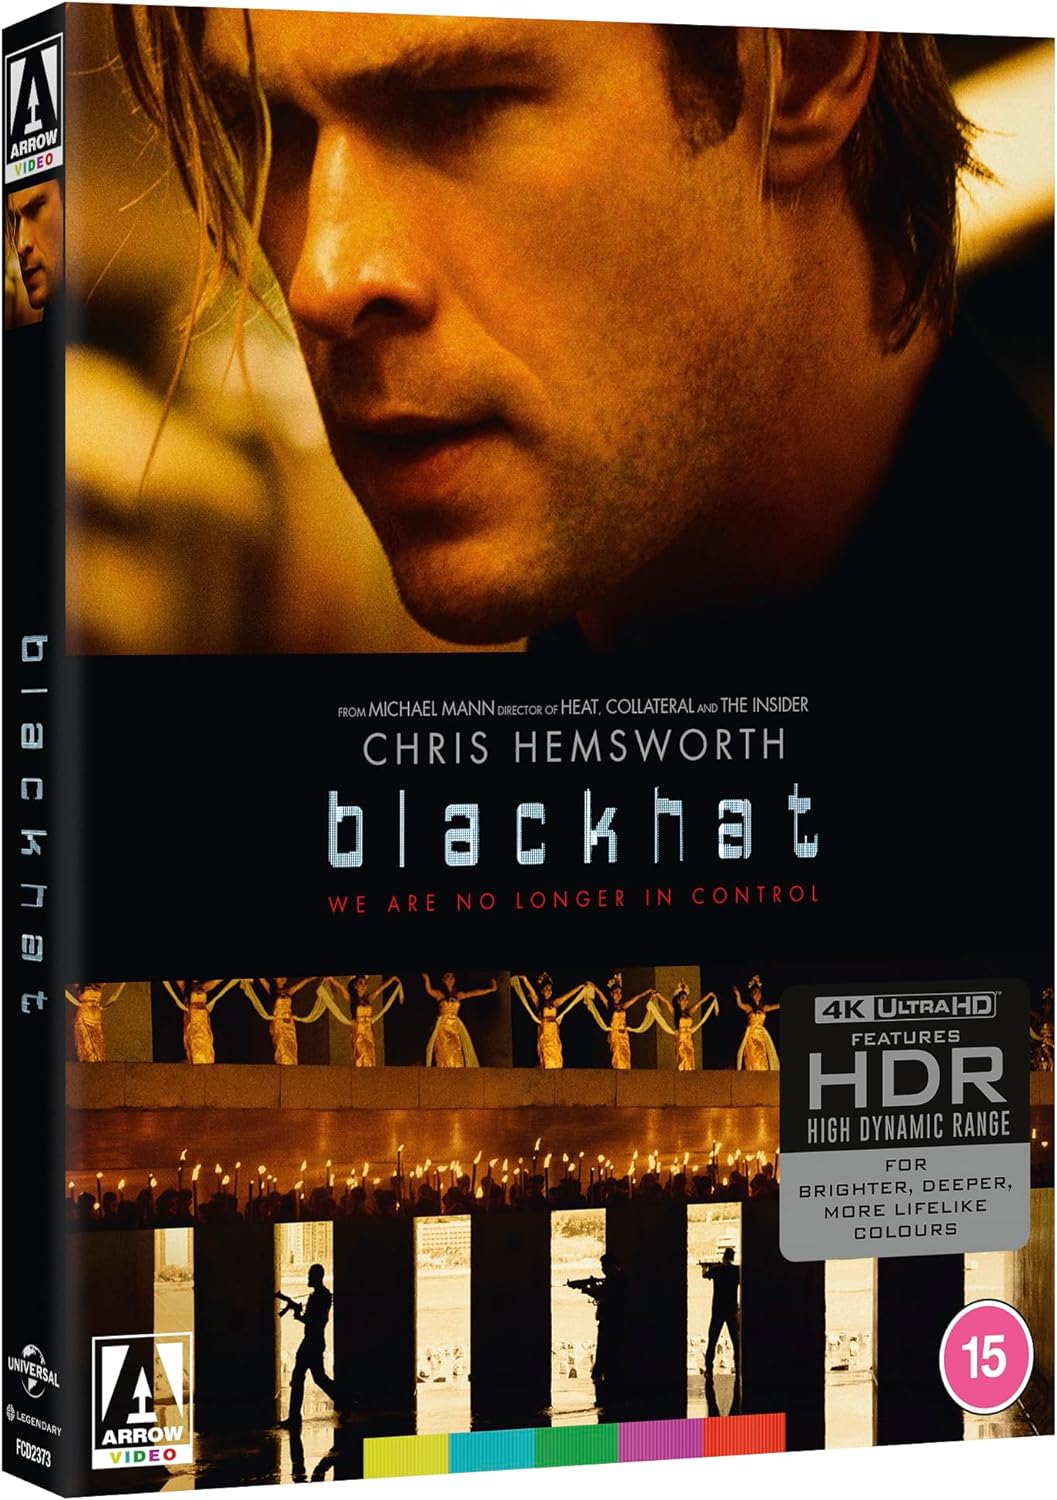 Blackhat Blu-ray sleeve